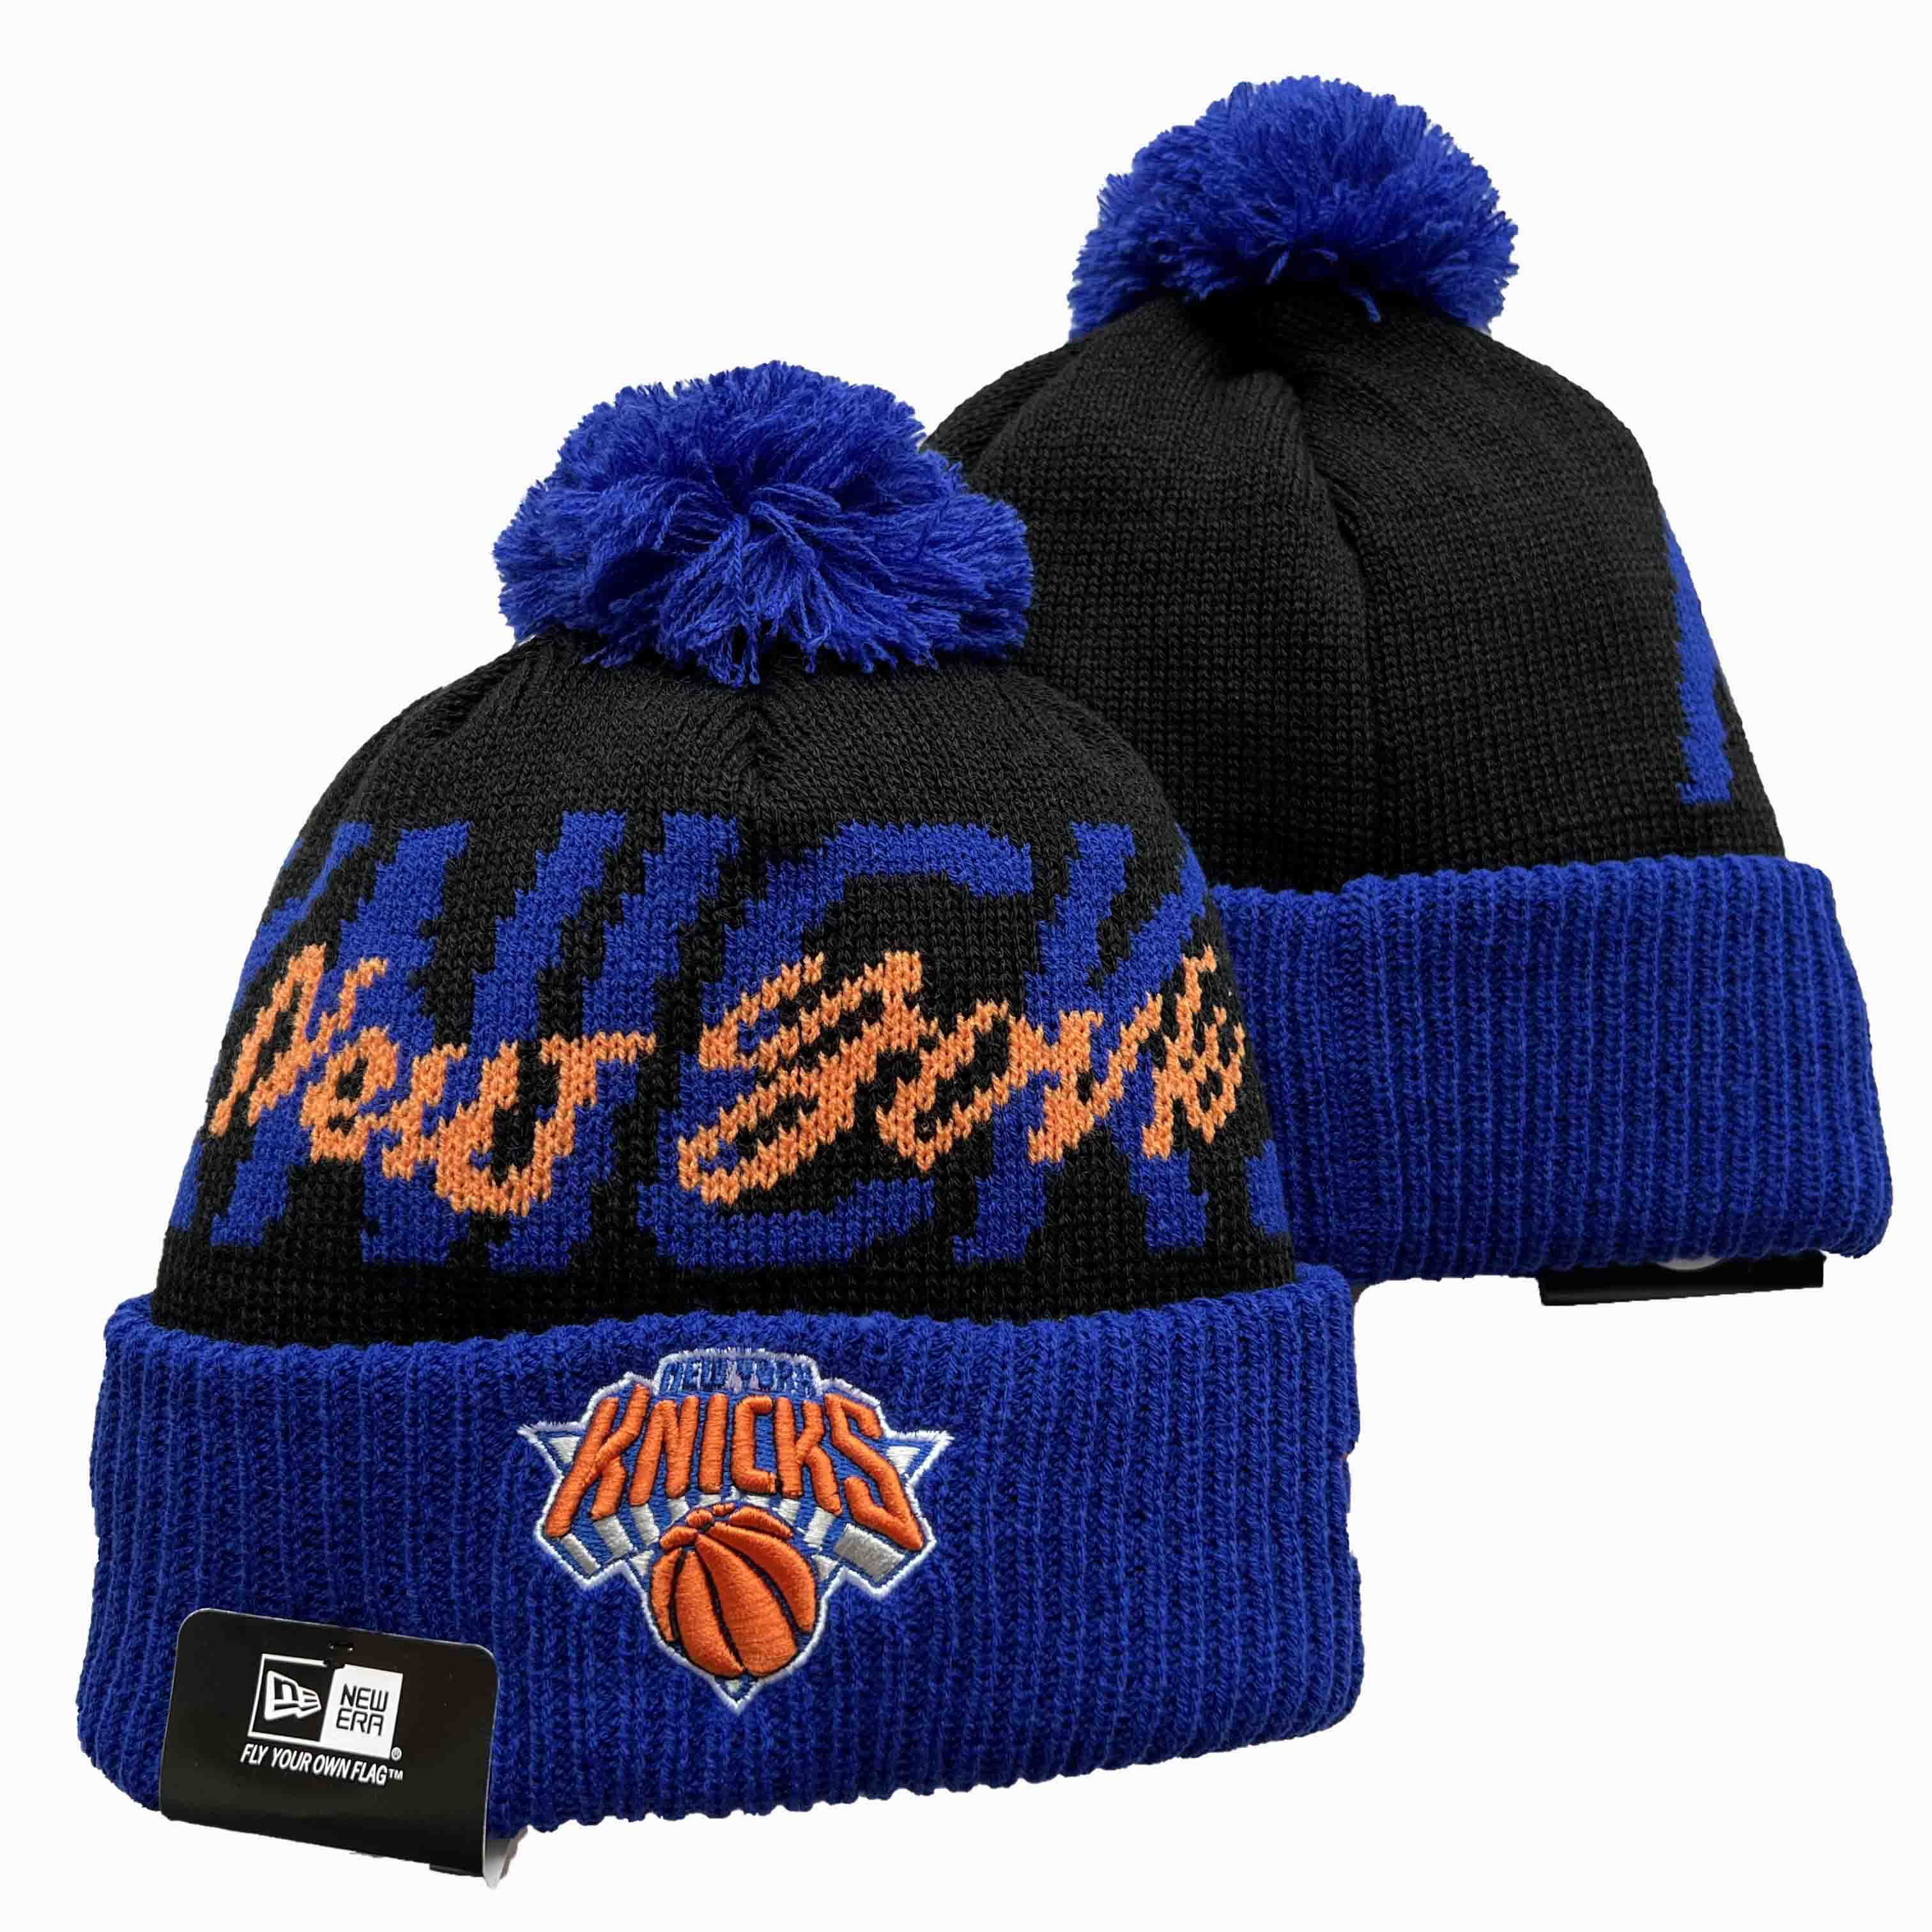 NBA New York Knicks Beanies Knit Hats-YD478